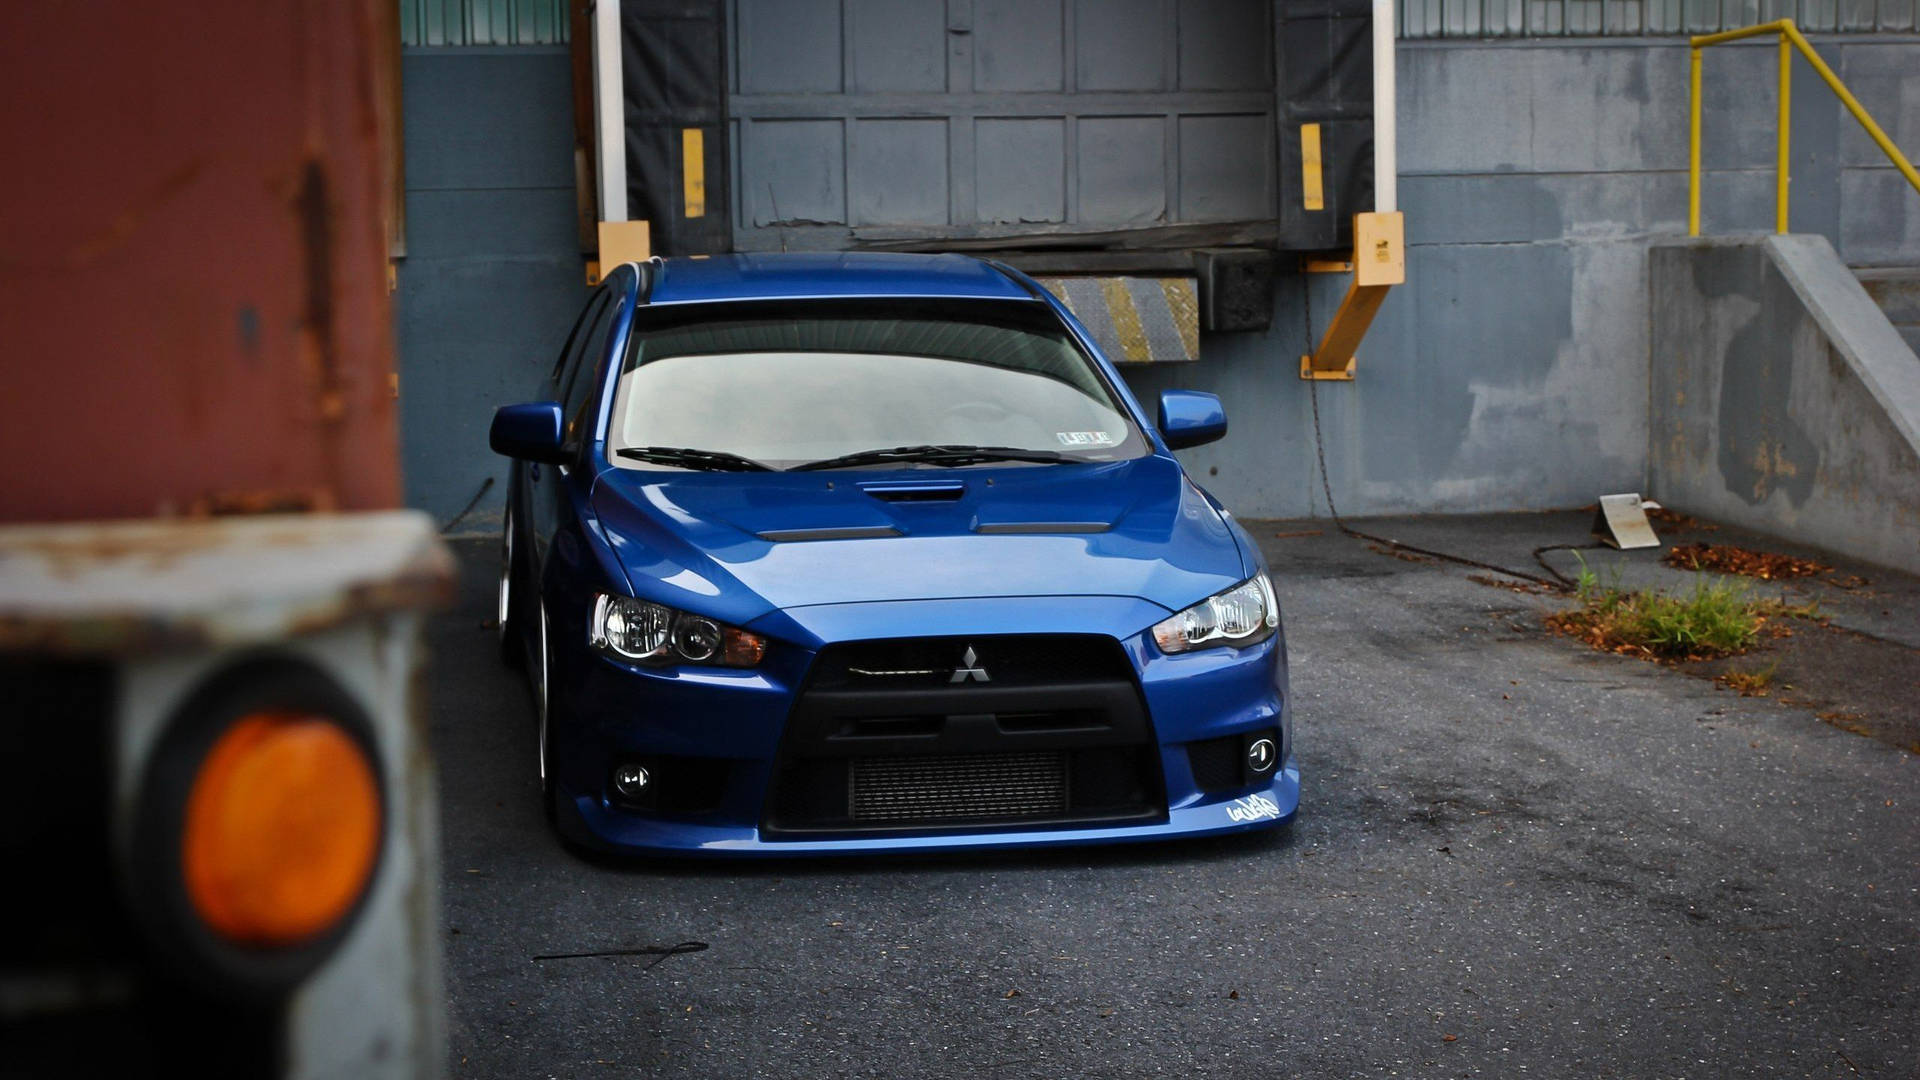 Blue Jdm Mitsubishi Evo X In Garage Background